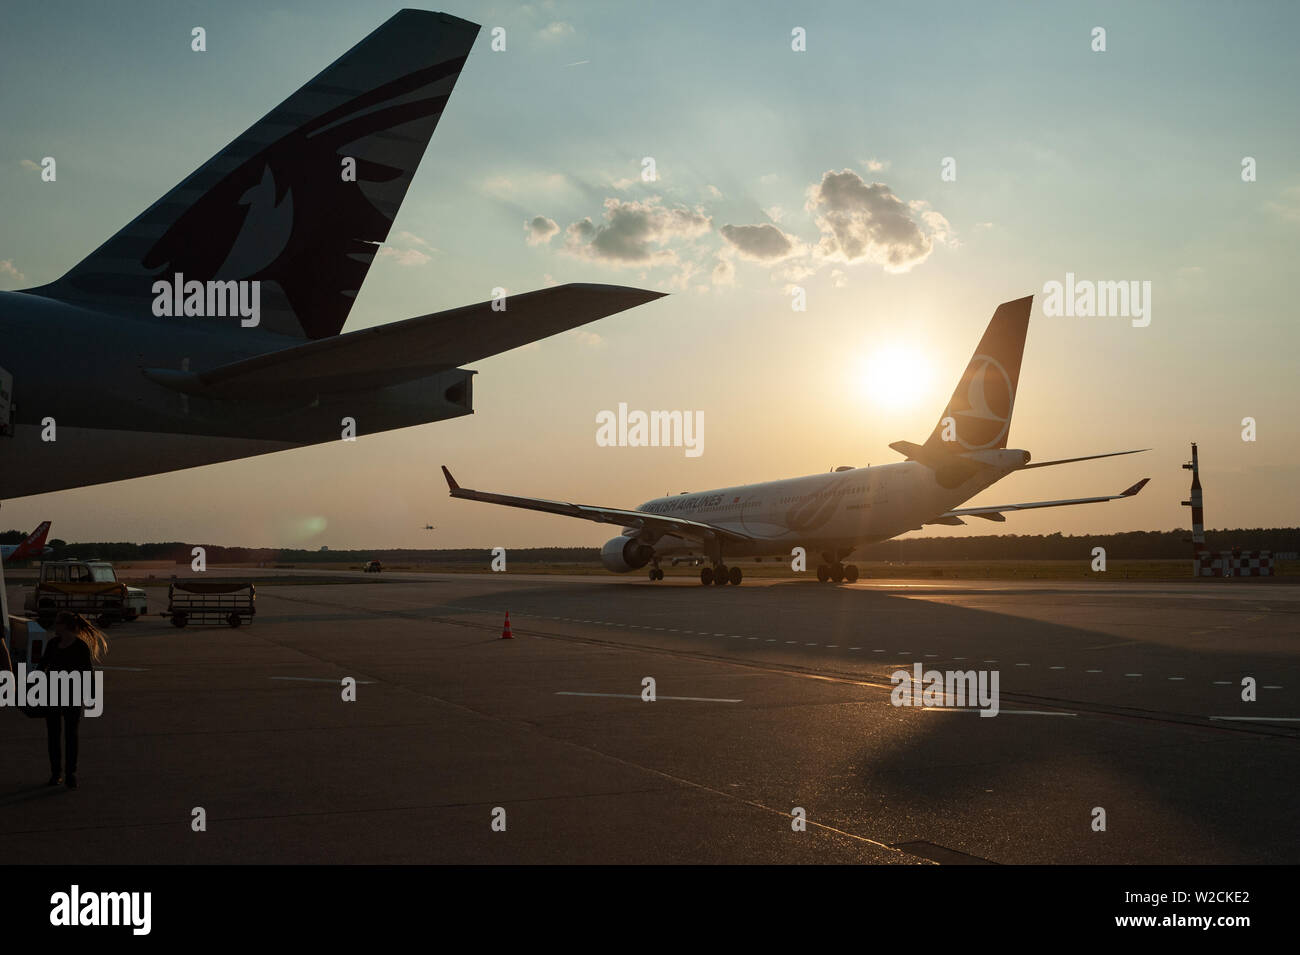 05.06.2019, Berlin, Germany, Europe - Passenger planes at Tegel Airport at dusk. Stock Photo